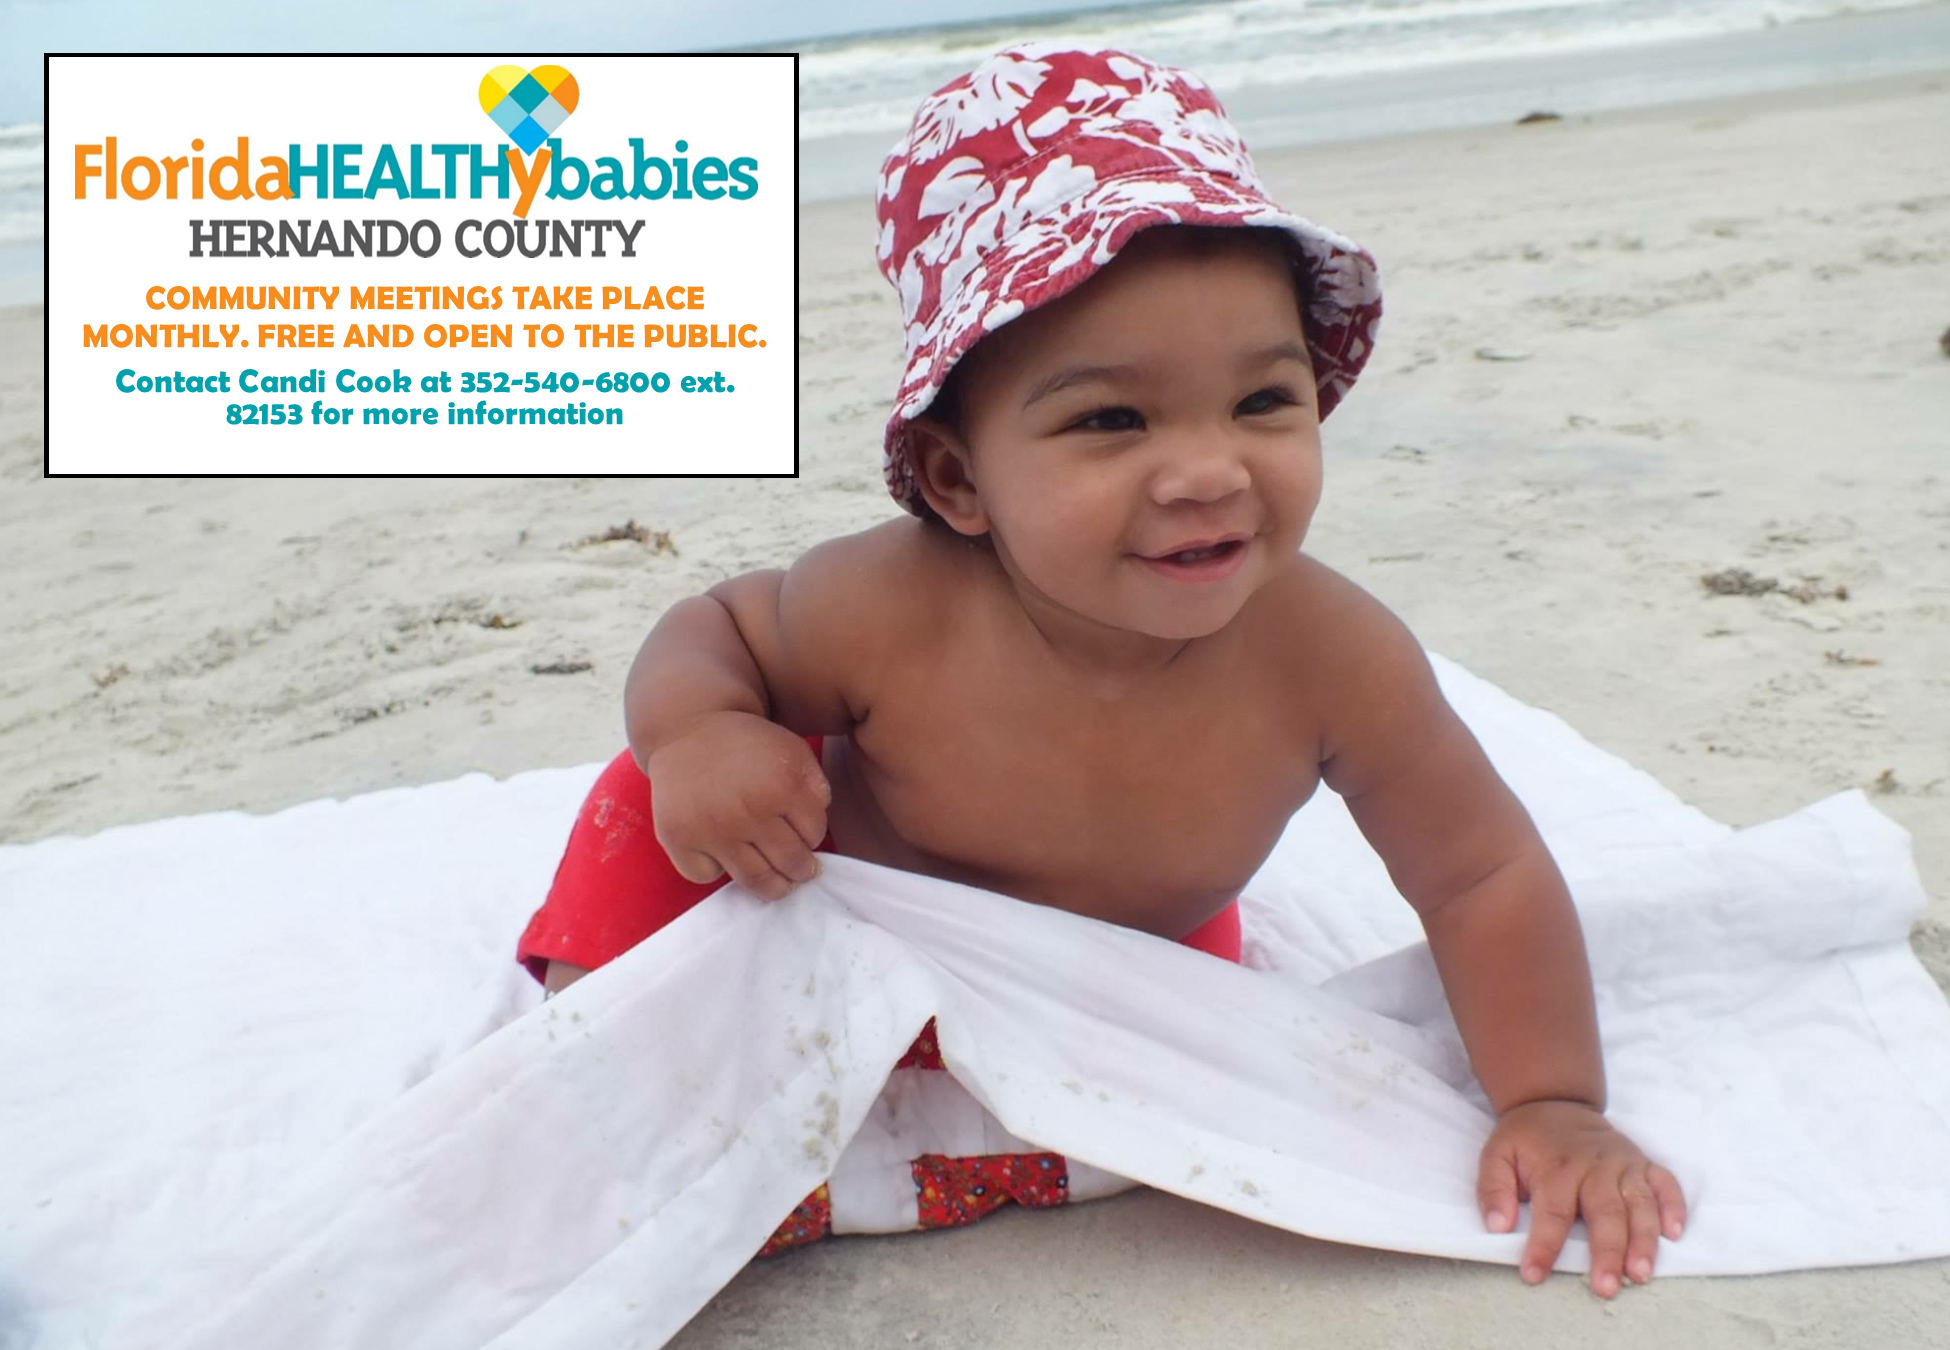 Camillus Rogers enjoys a day on the beach as a Florida Healthy Baby